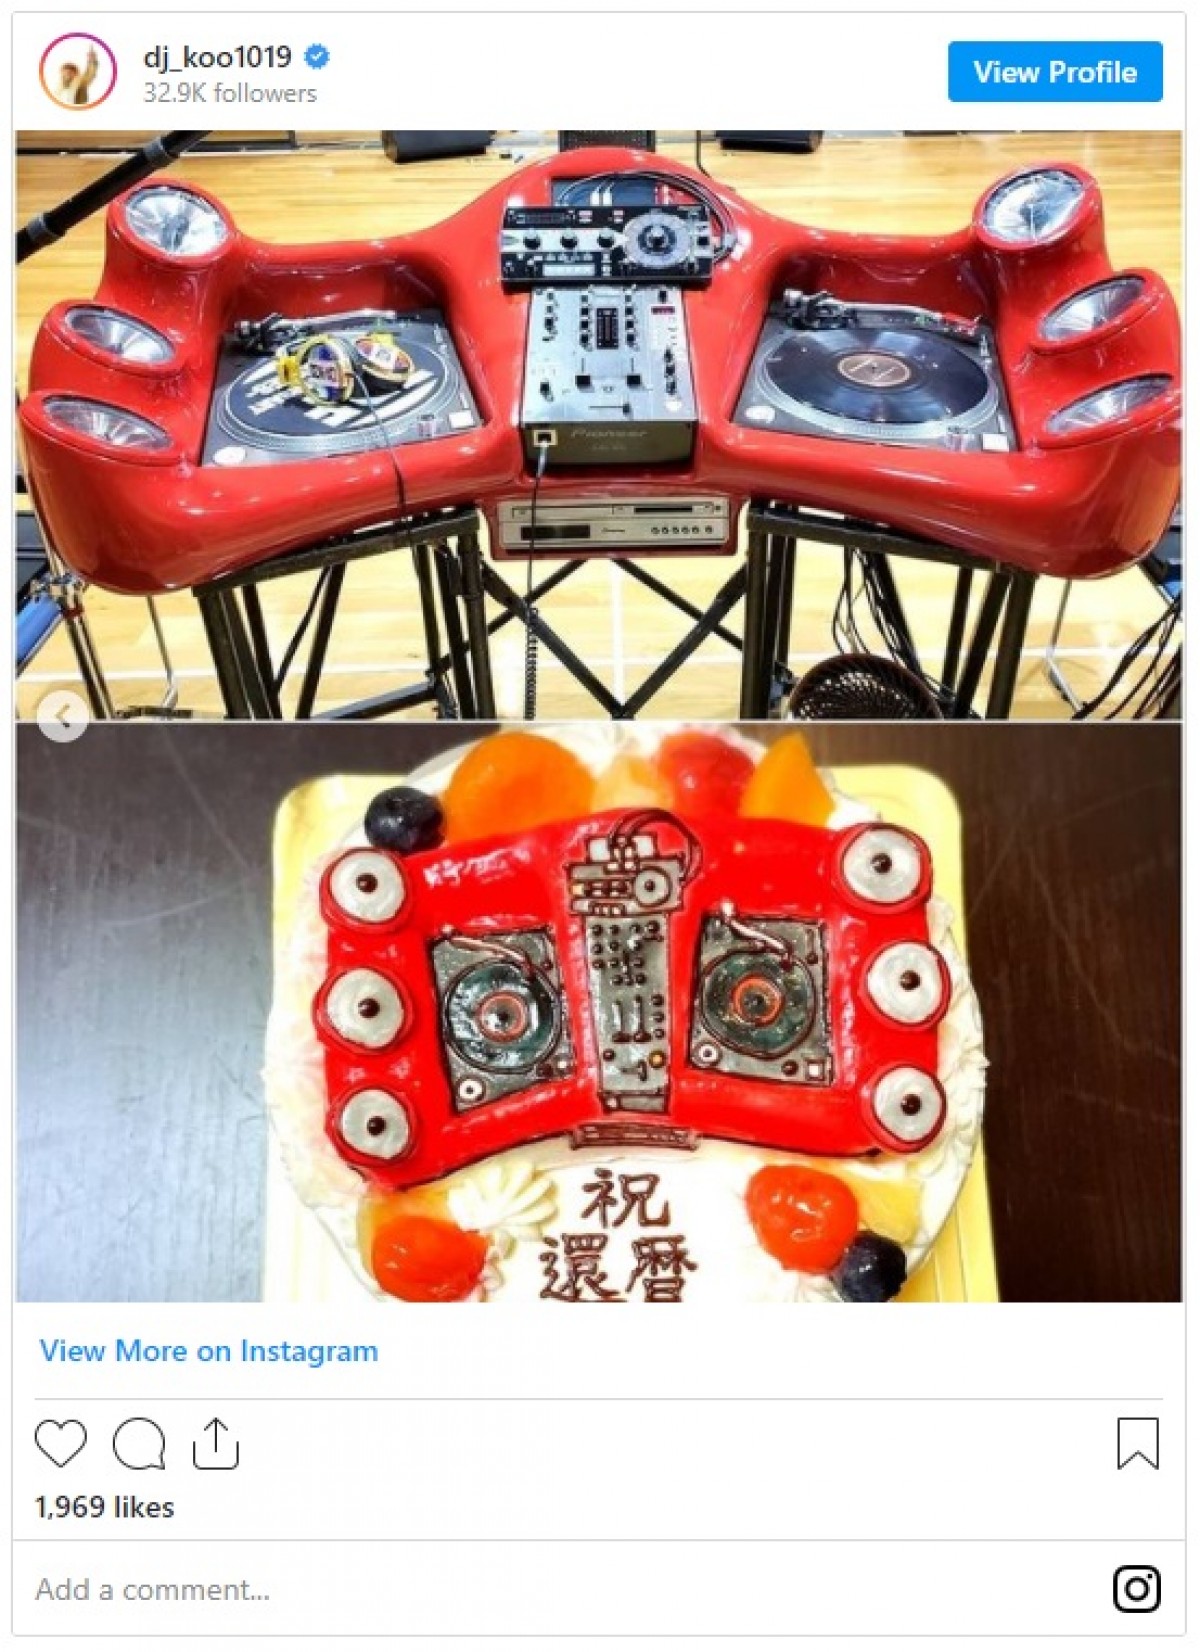 DJ KOOが還暦に　“ちゃんちゃんKOO”姿でお祝い　ファンも祝福